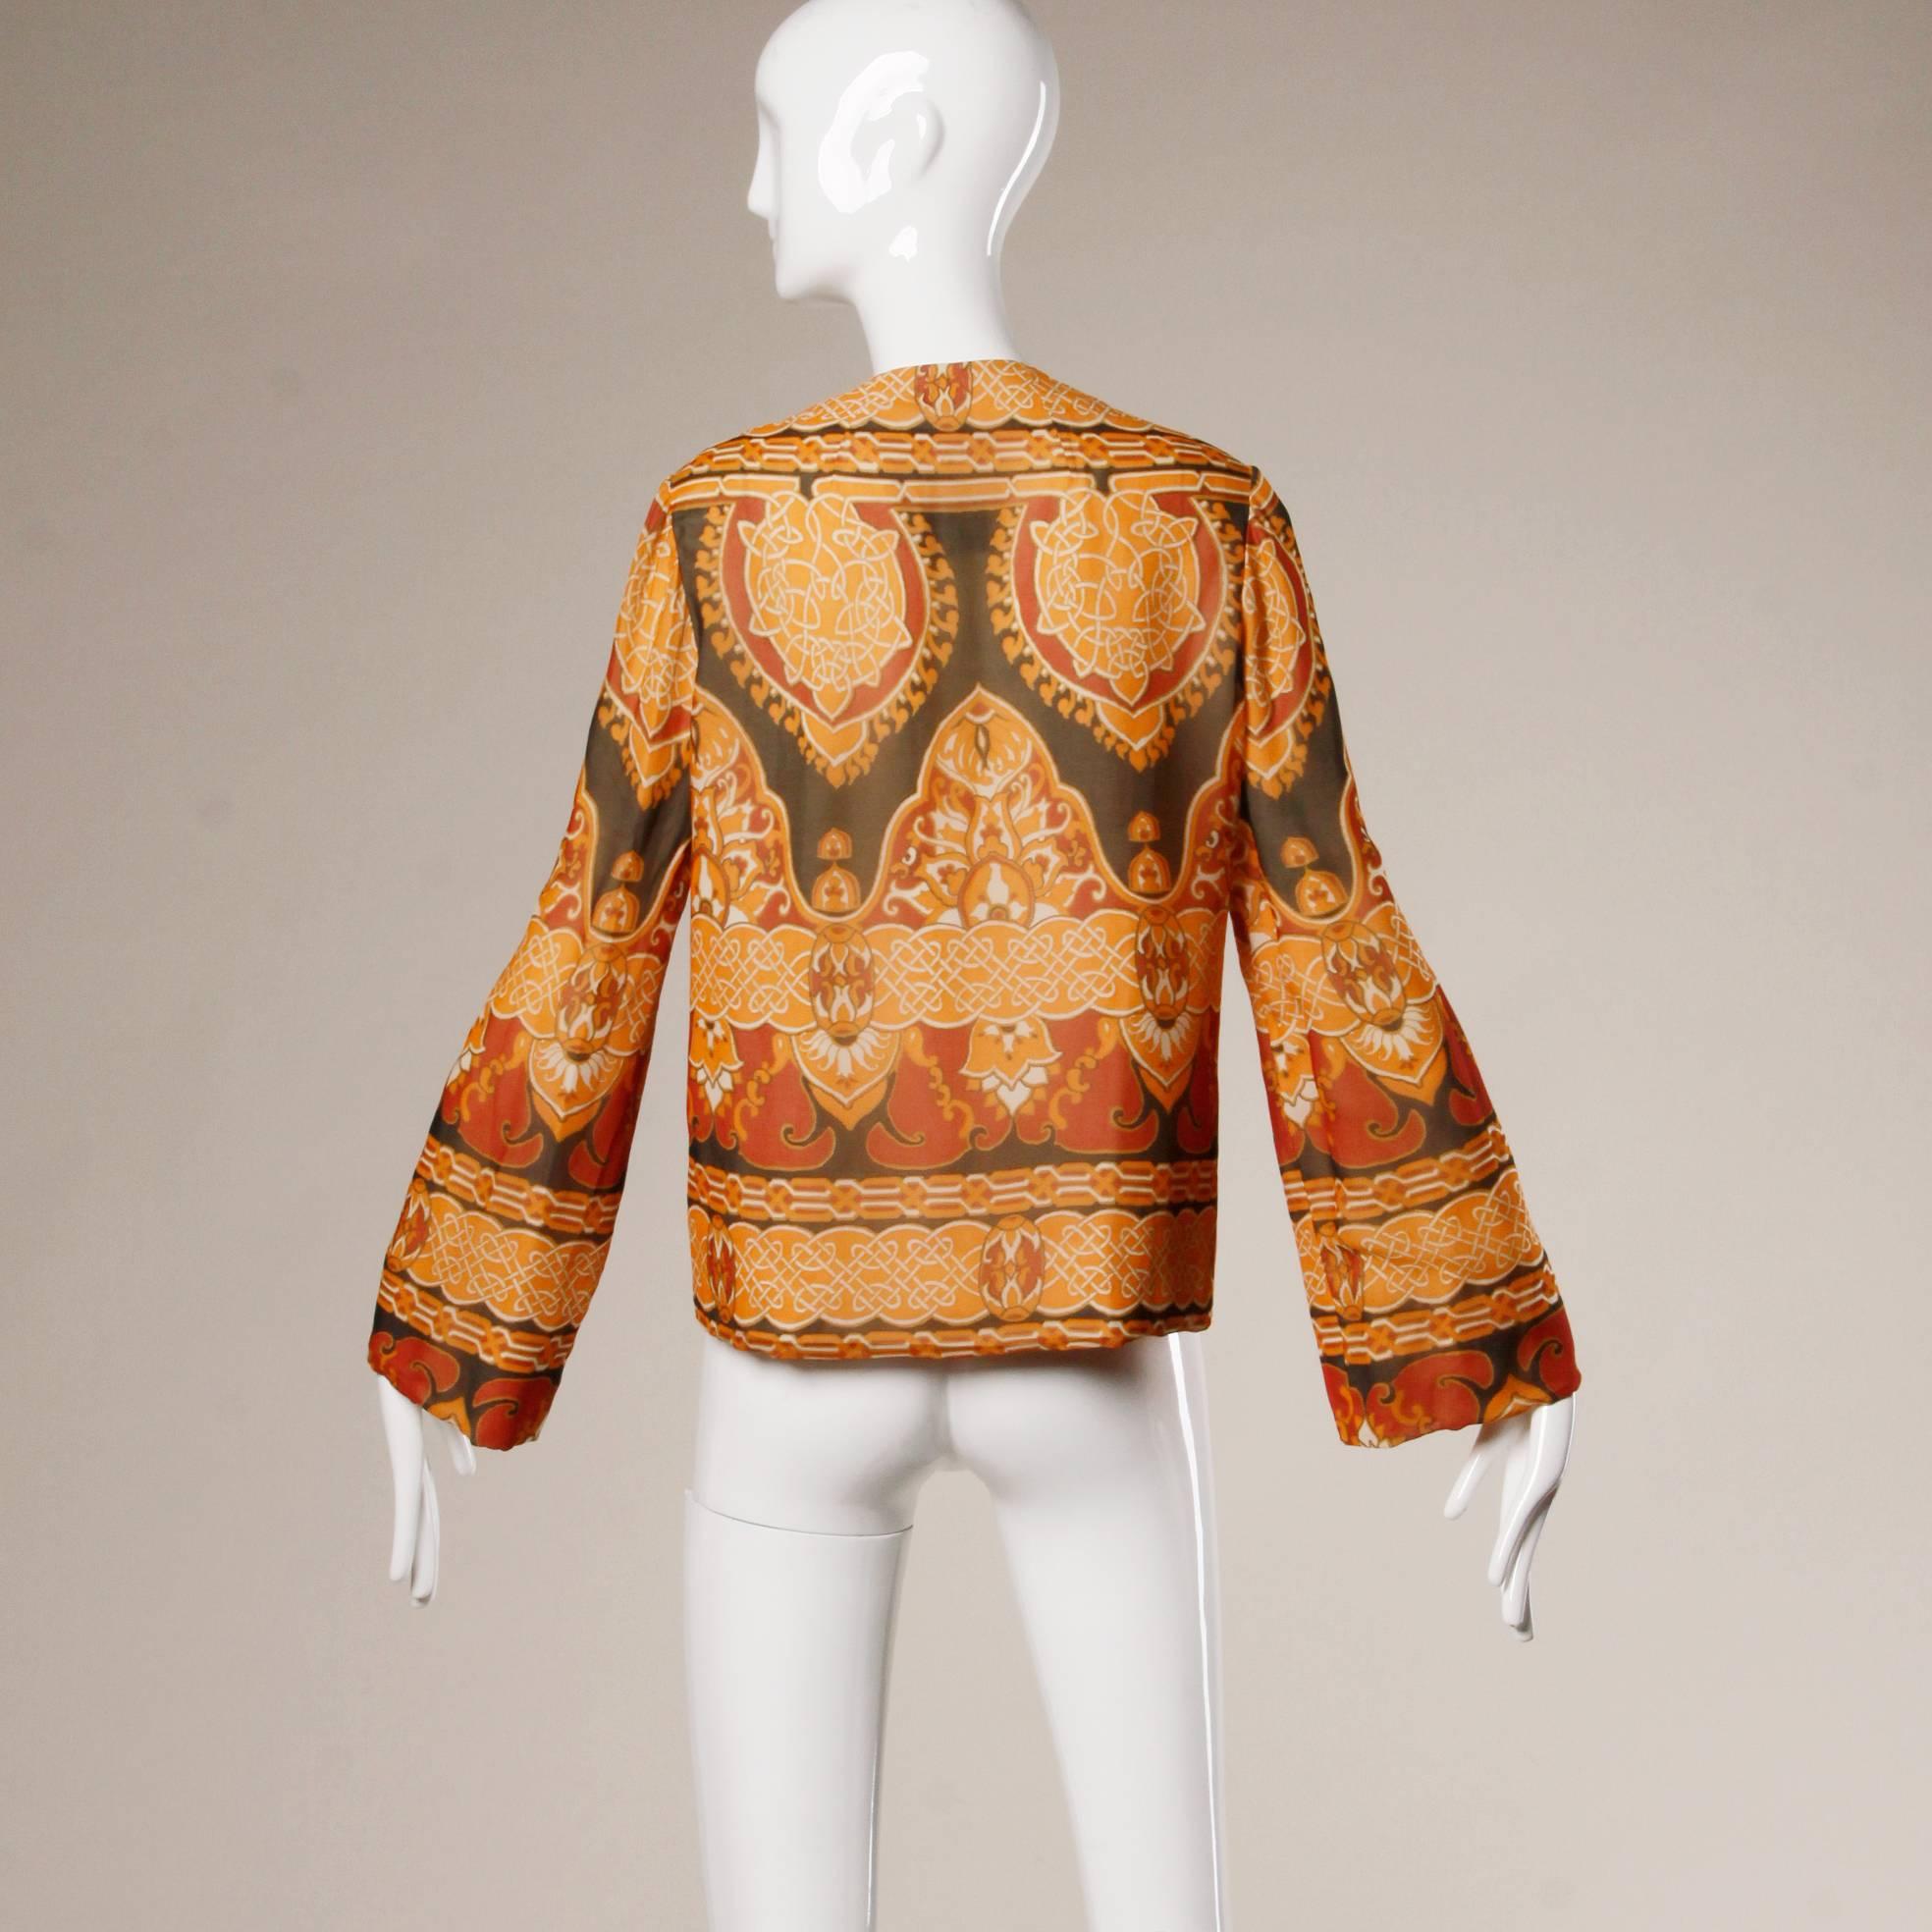 Women's 1960s Geoffrey Beene Vintage Silk Art Nouveau Print Jacket with Bell Sleeves